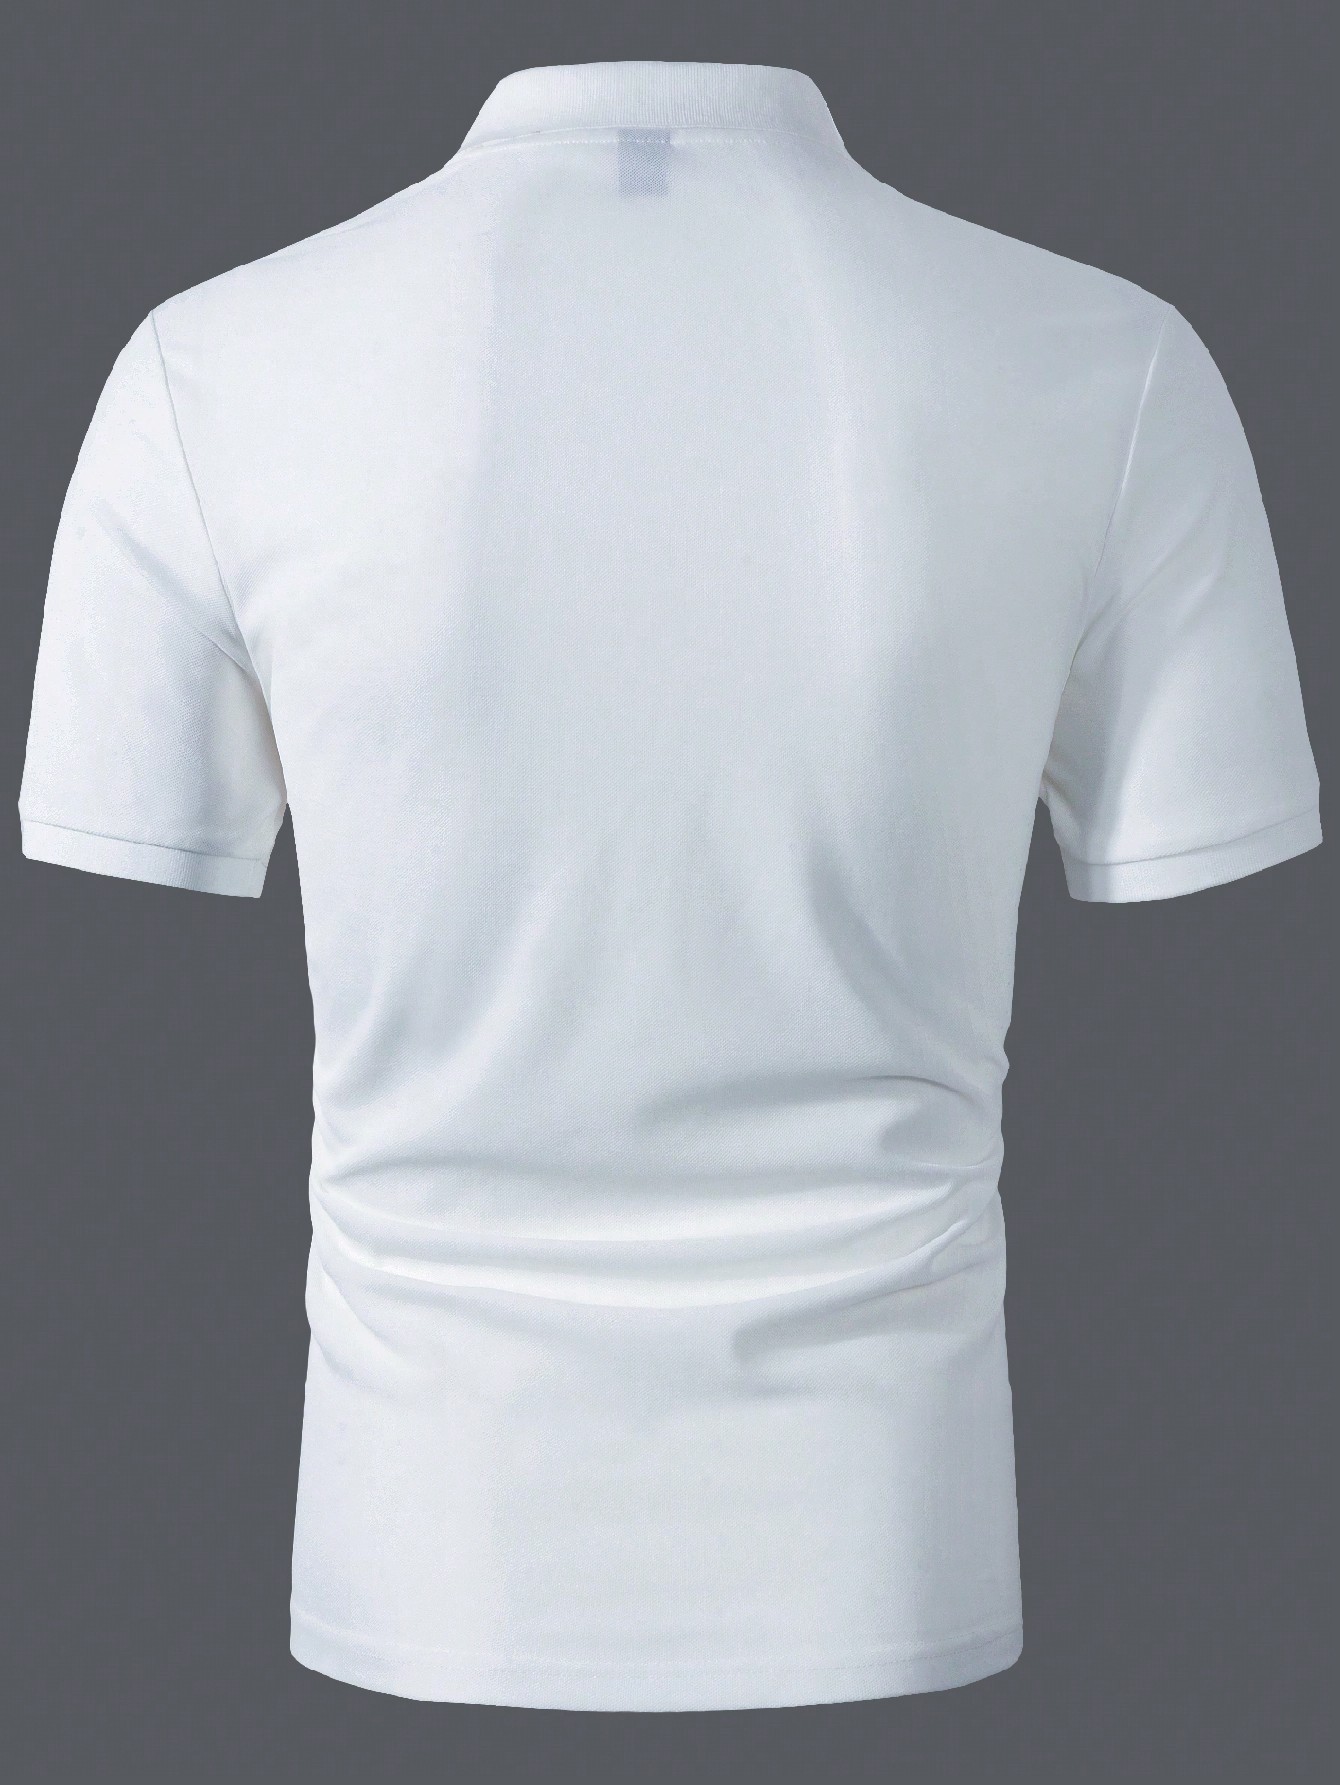 Мужская однотонная рубашка-поло с короткими рукавами Manfinity Homme, белый рубашка поло с короткими рукавами – мужская smartwool цвет almond heather